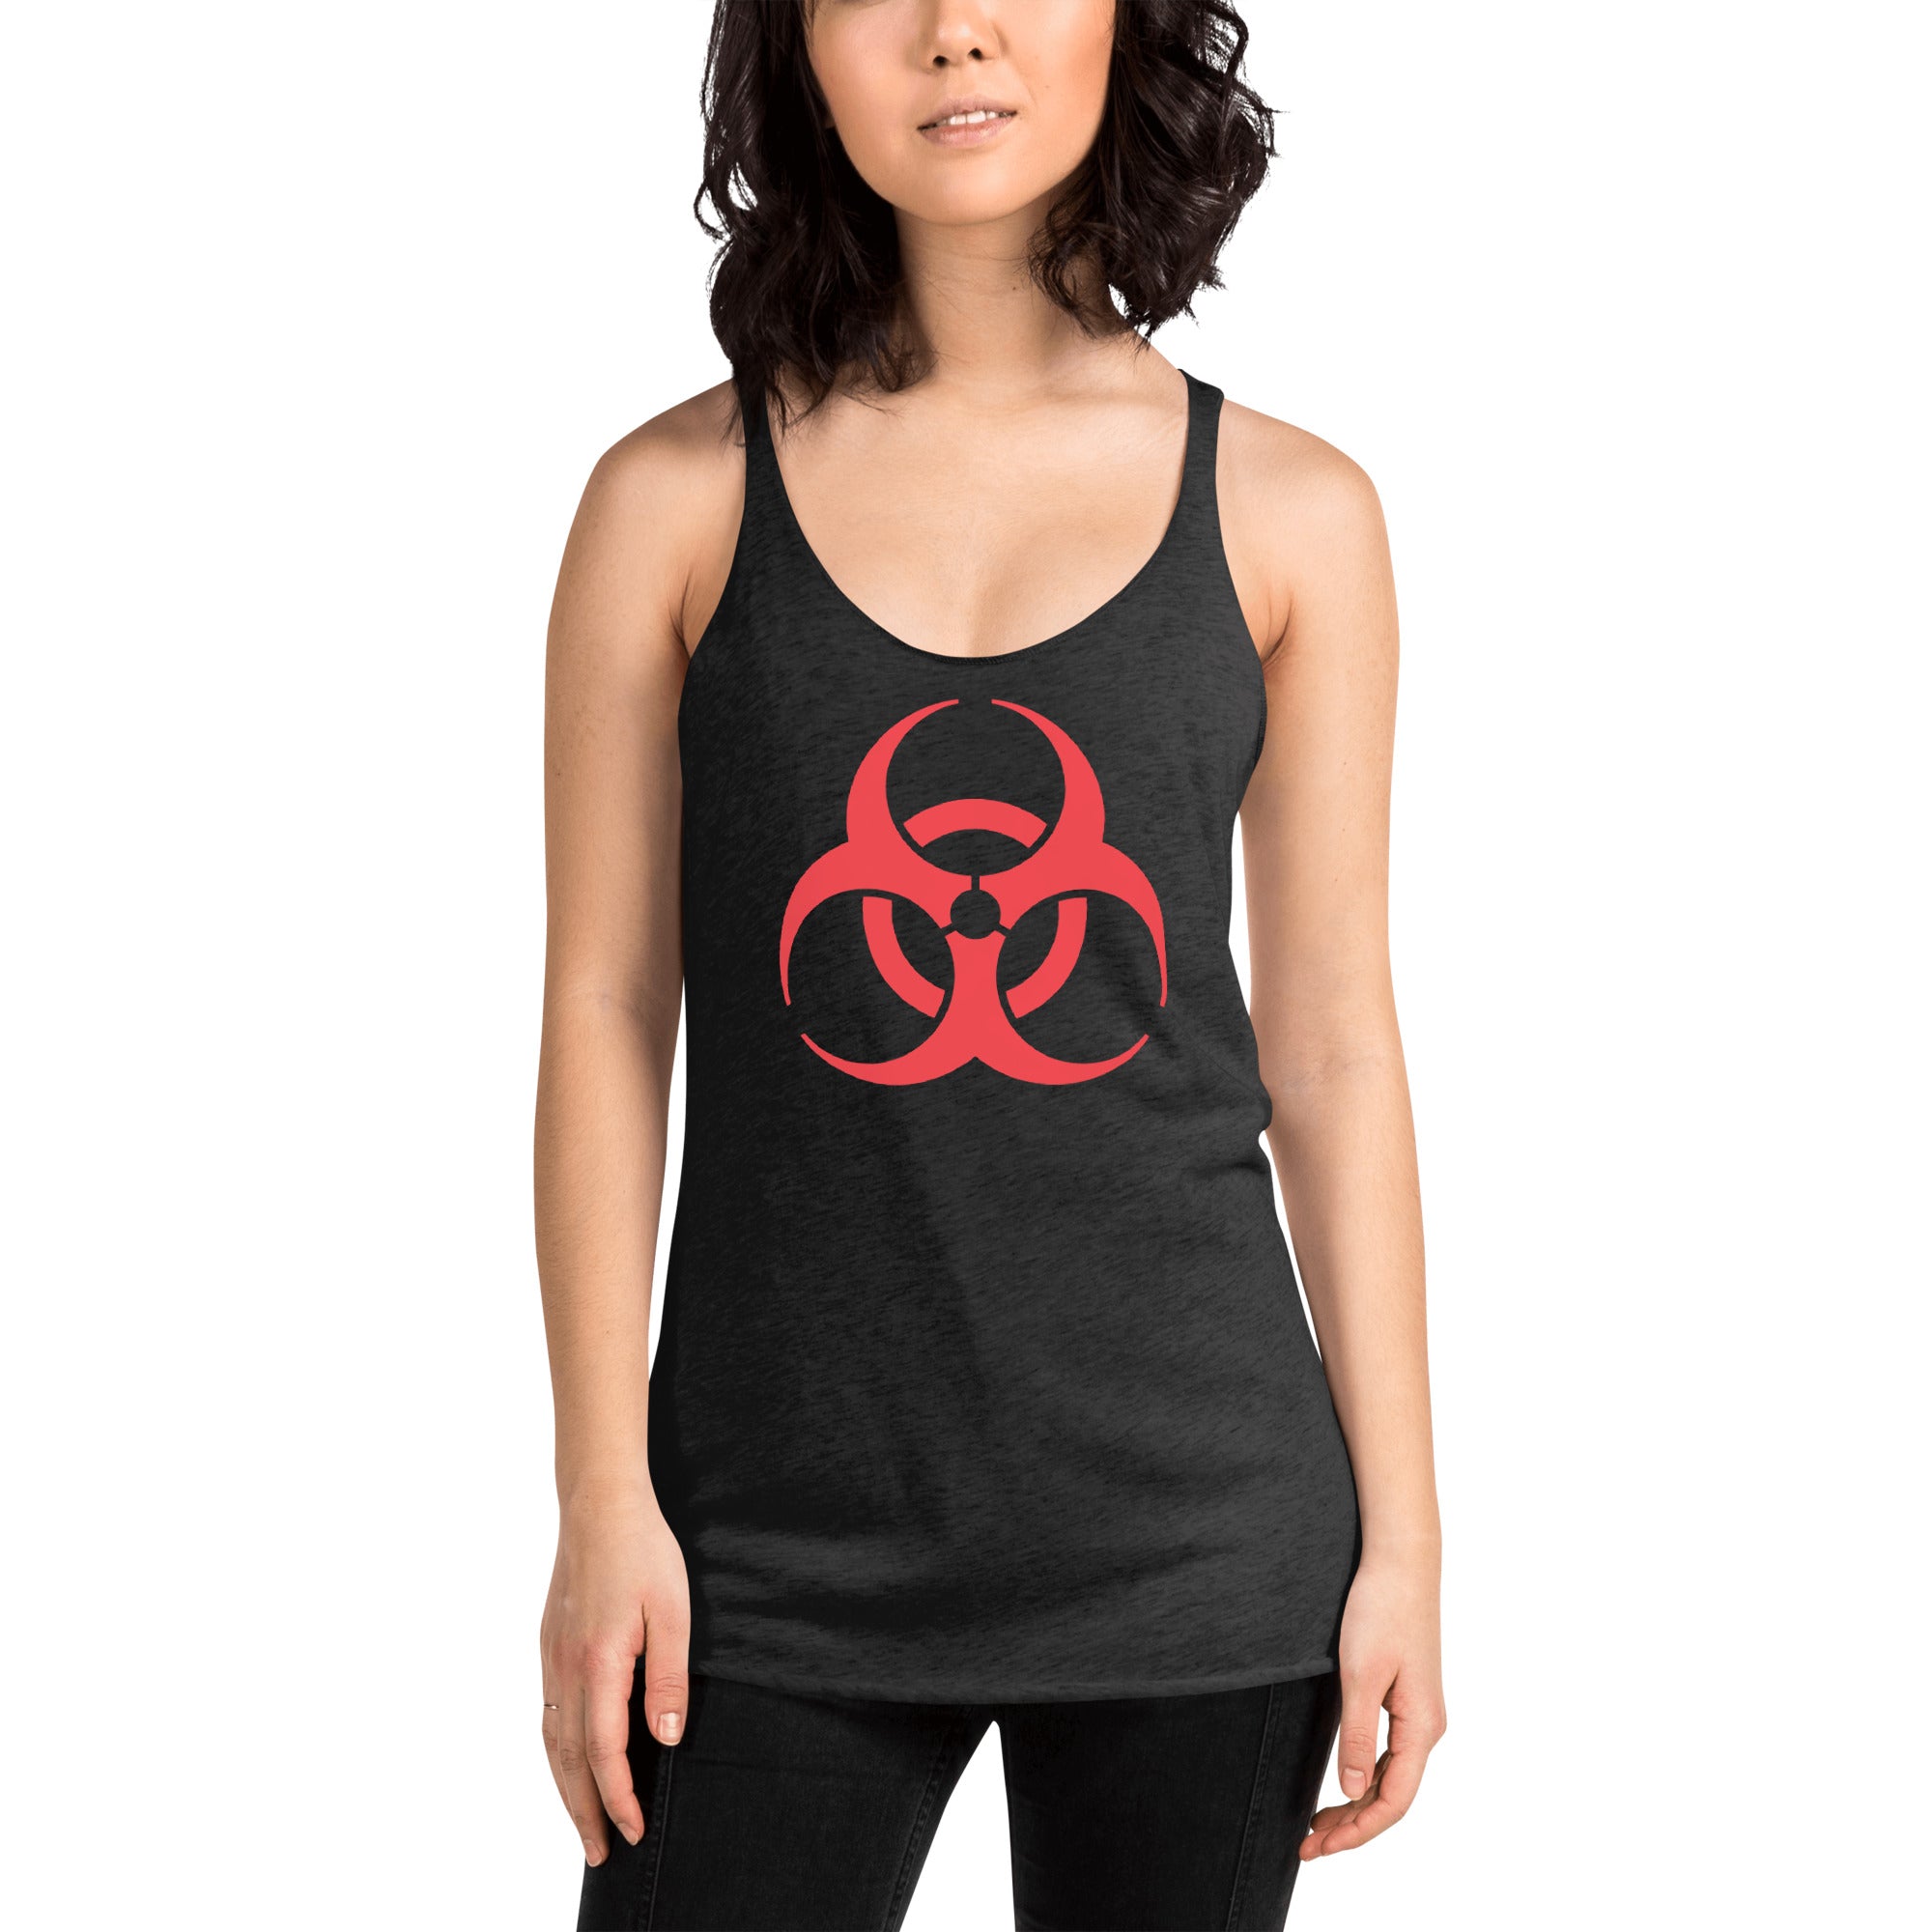 Red Biohazard Sign Toxic Chemical Symbol  Women's Racerback Tank Top Shirt